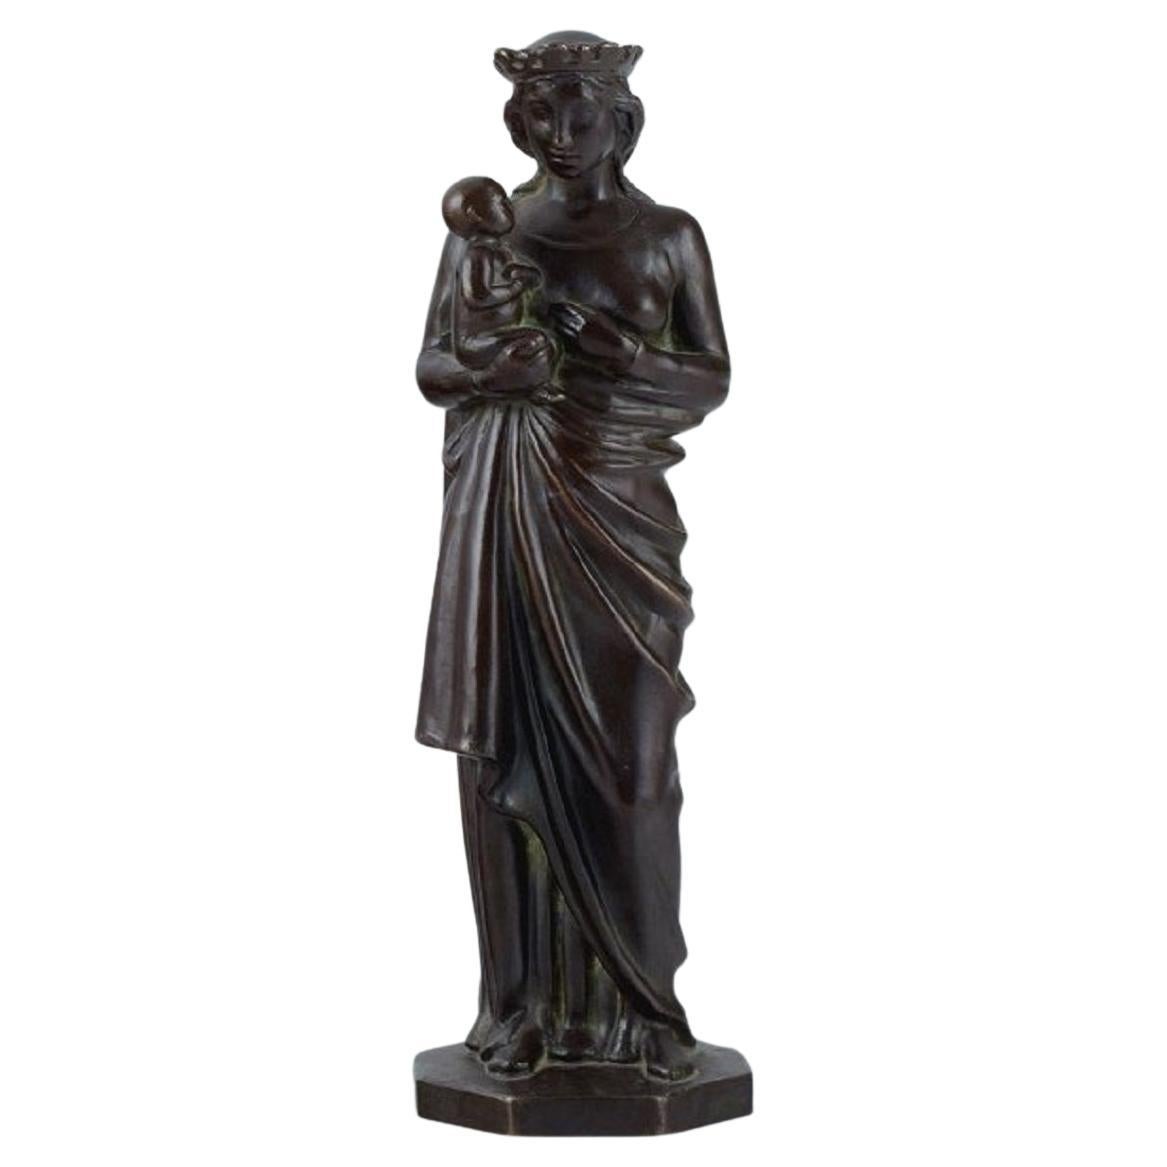 Johan G. C. Galster, Danish Sculptor, Bronze Figure of Virgin Mary and Child